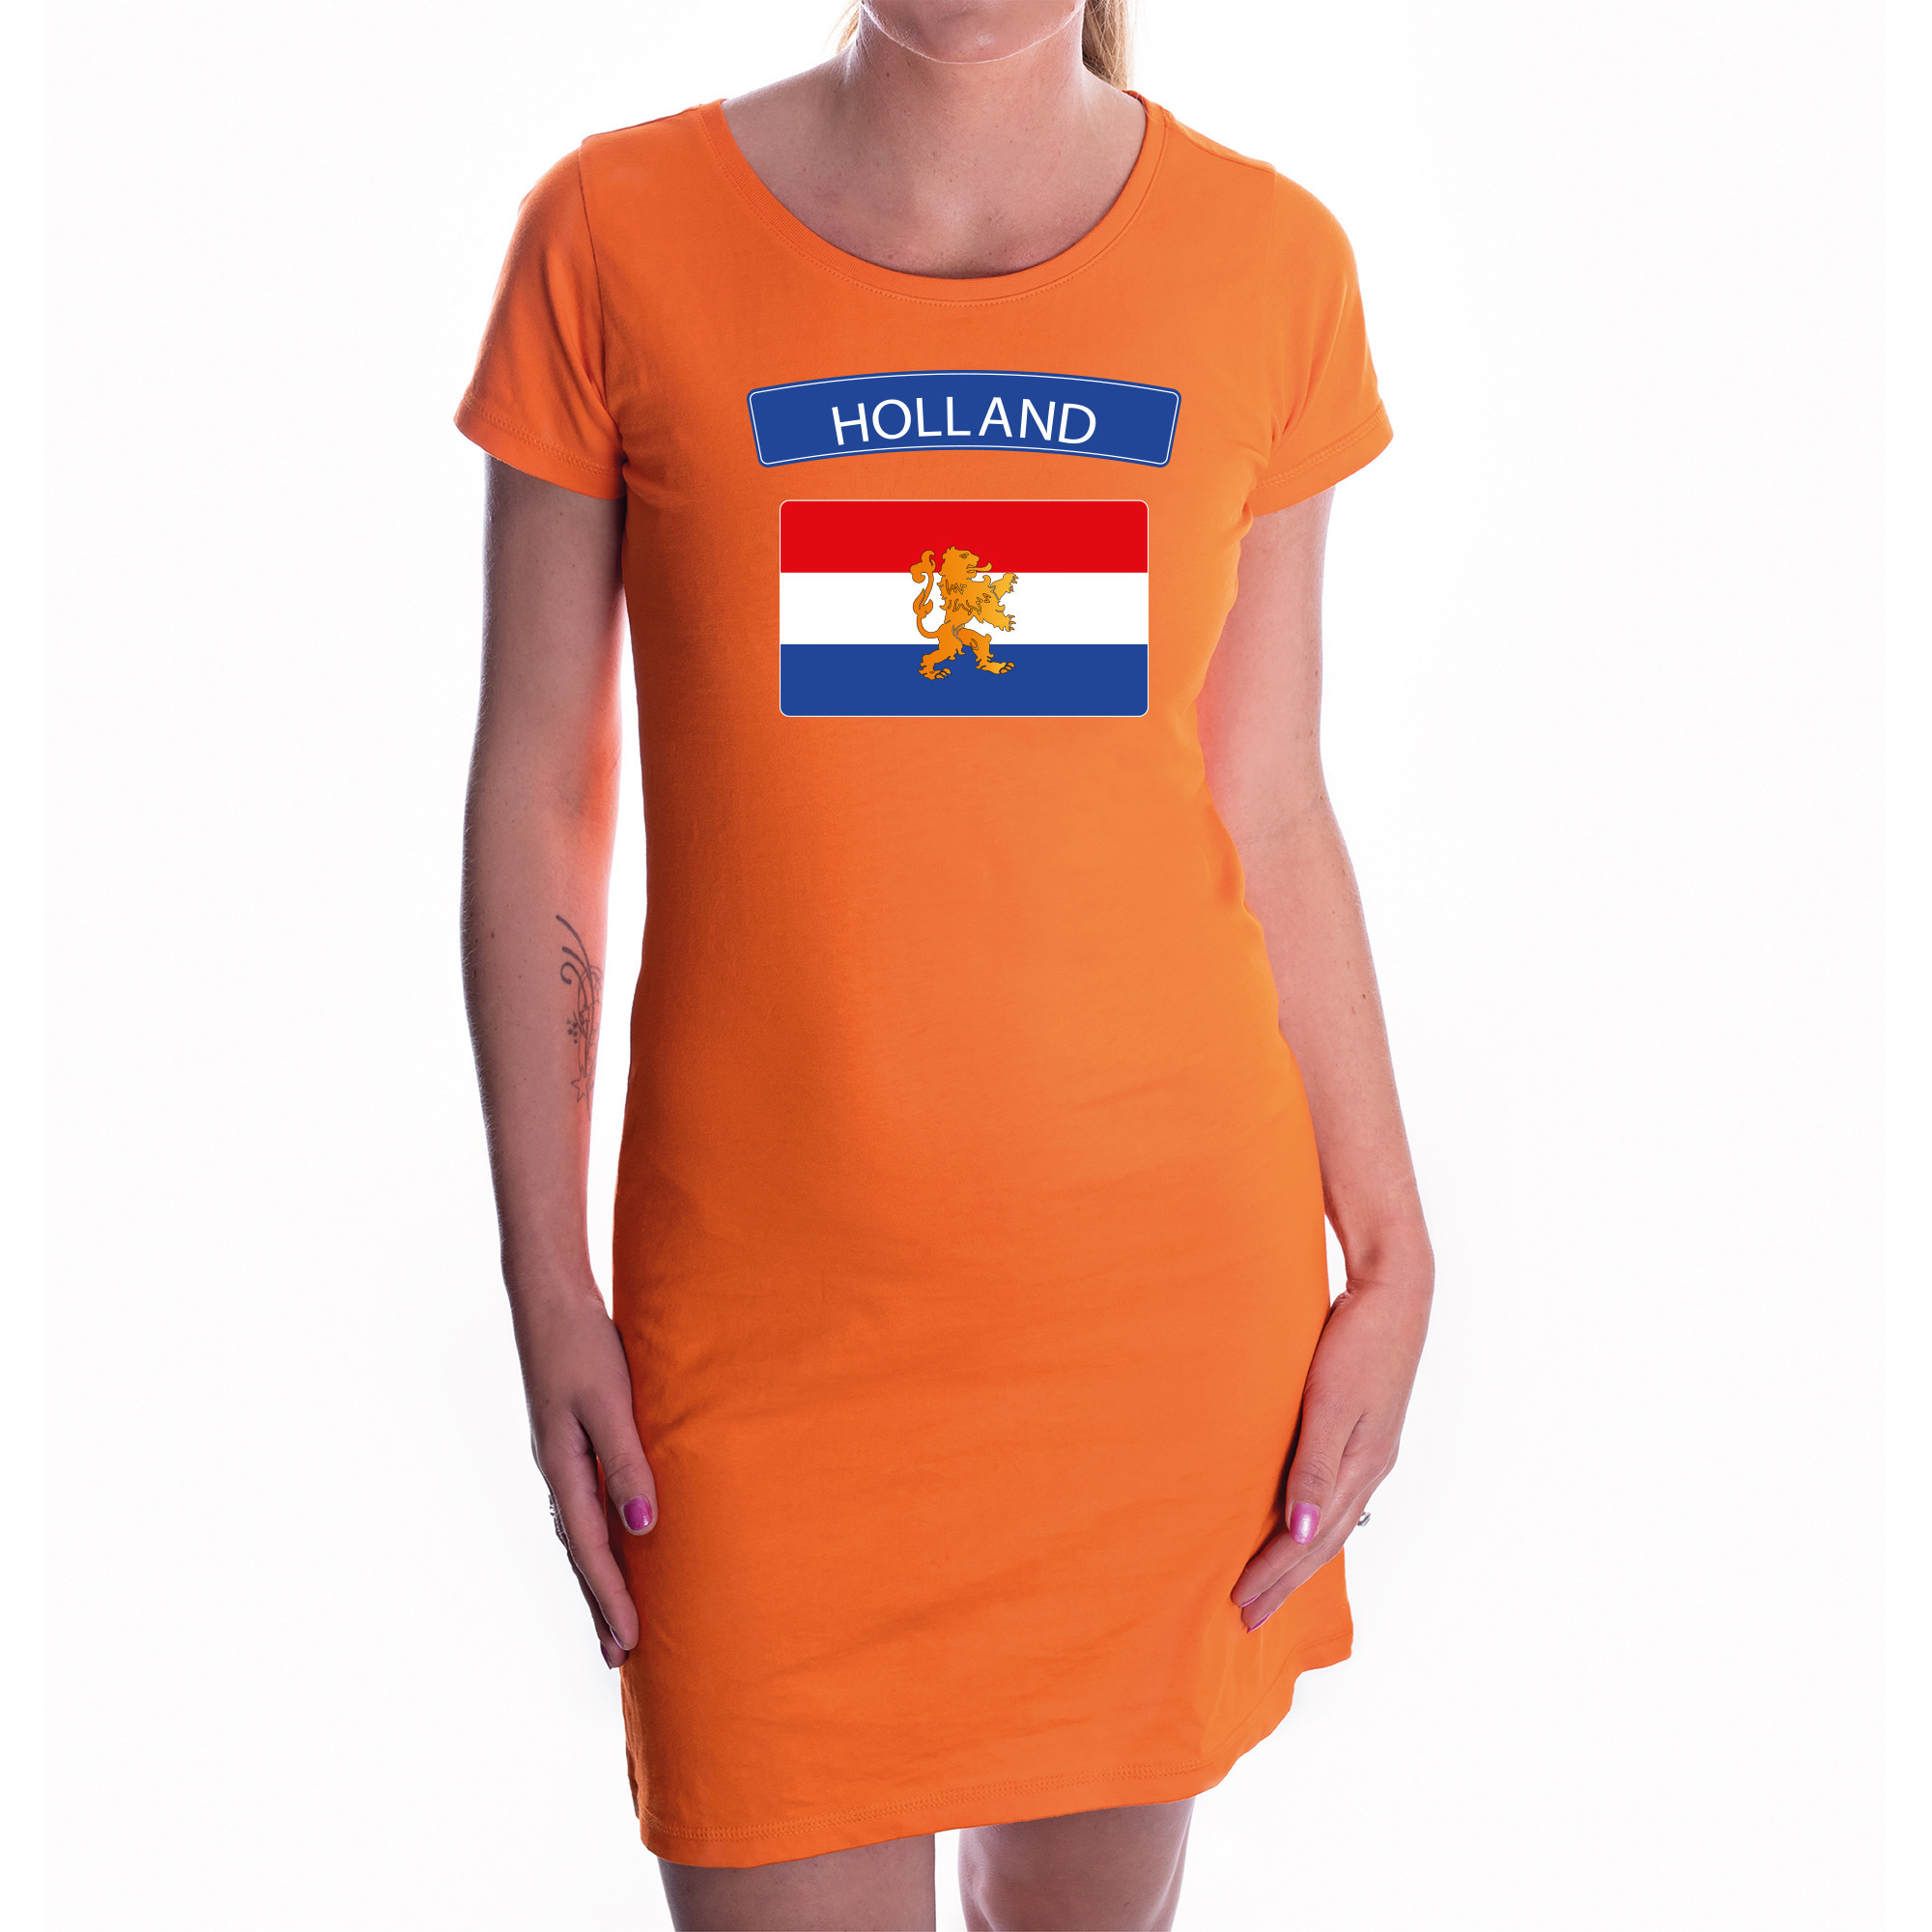 Holland - Oranje jurkje met Nederlandse vlag voor dames